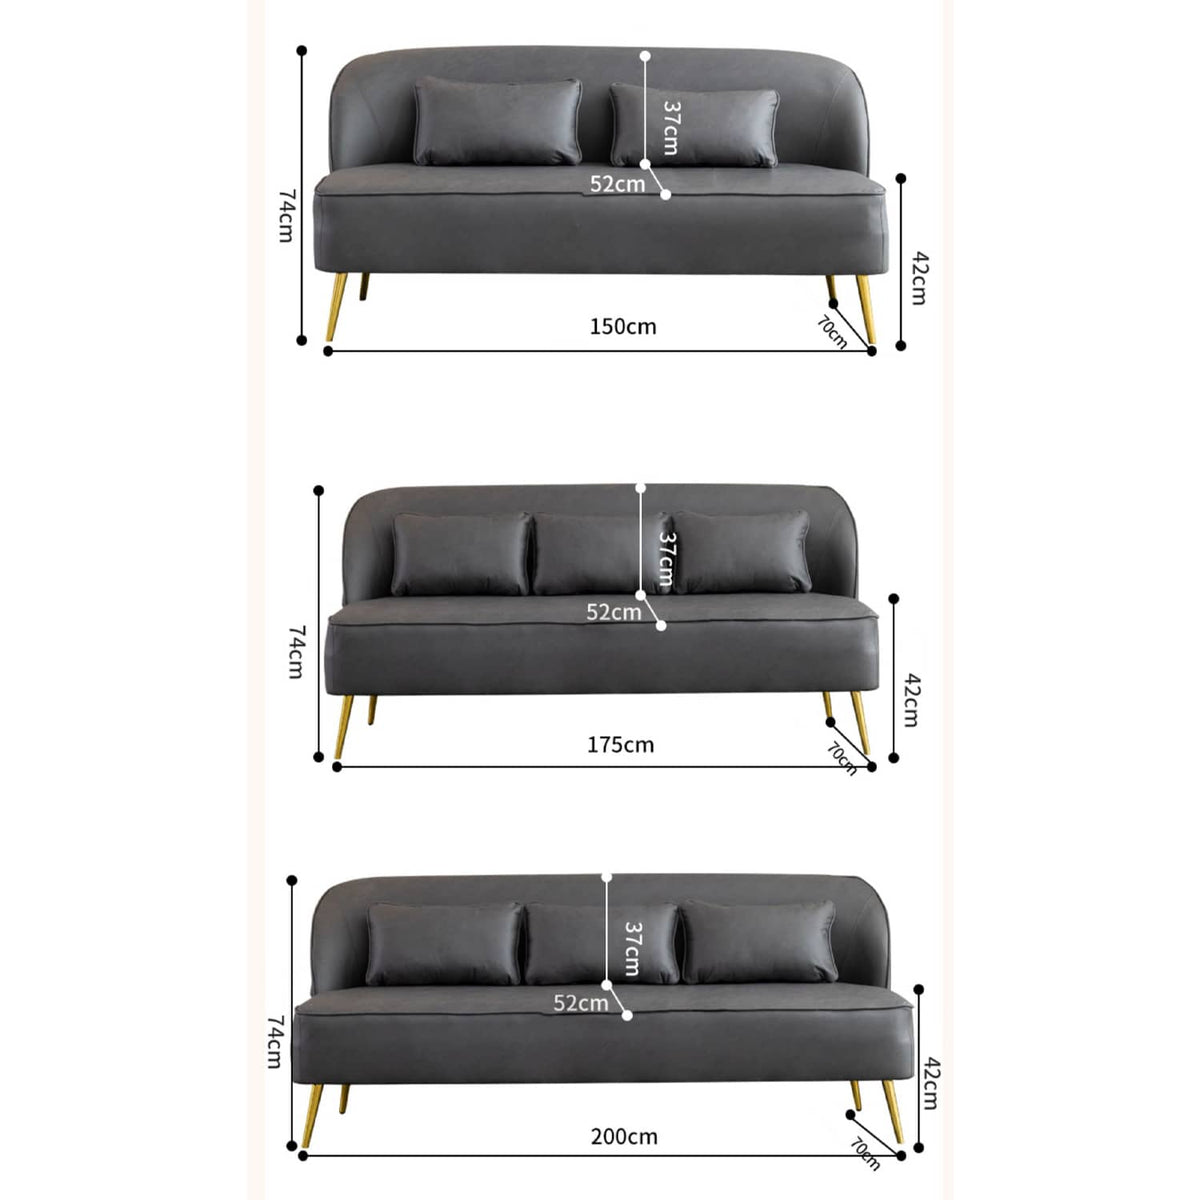 Modern Multi-Color Sofa: Gray, Yellow, Off-White, Dark Green, Orange - Premium Techno Fabric & Cotton, Wood Frame qm-13